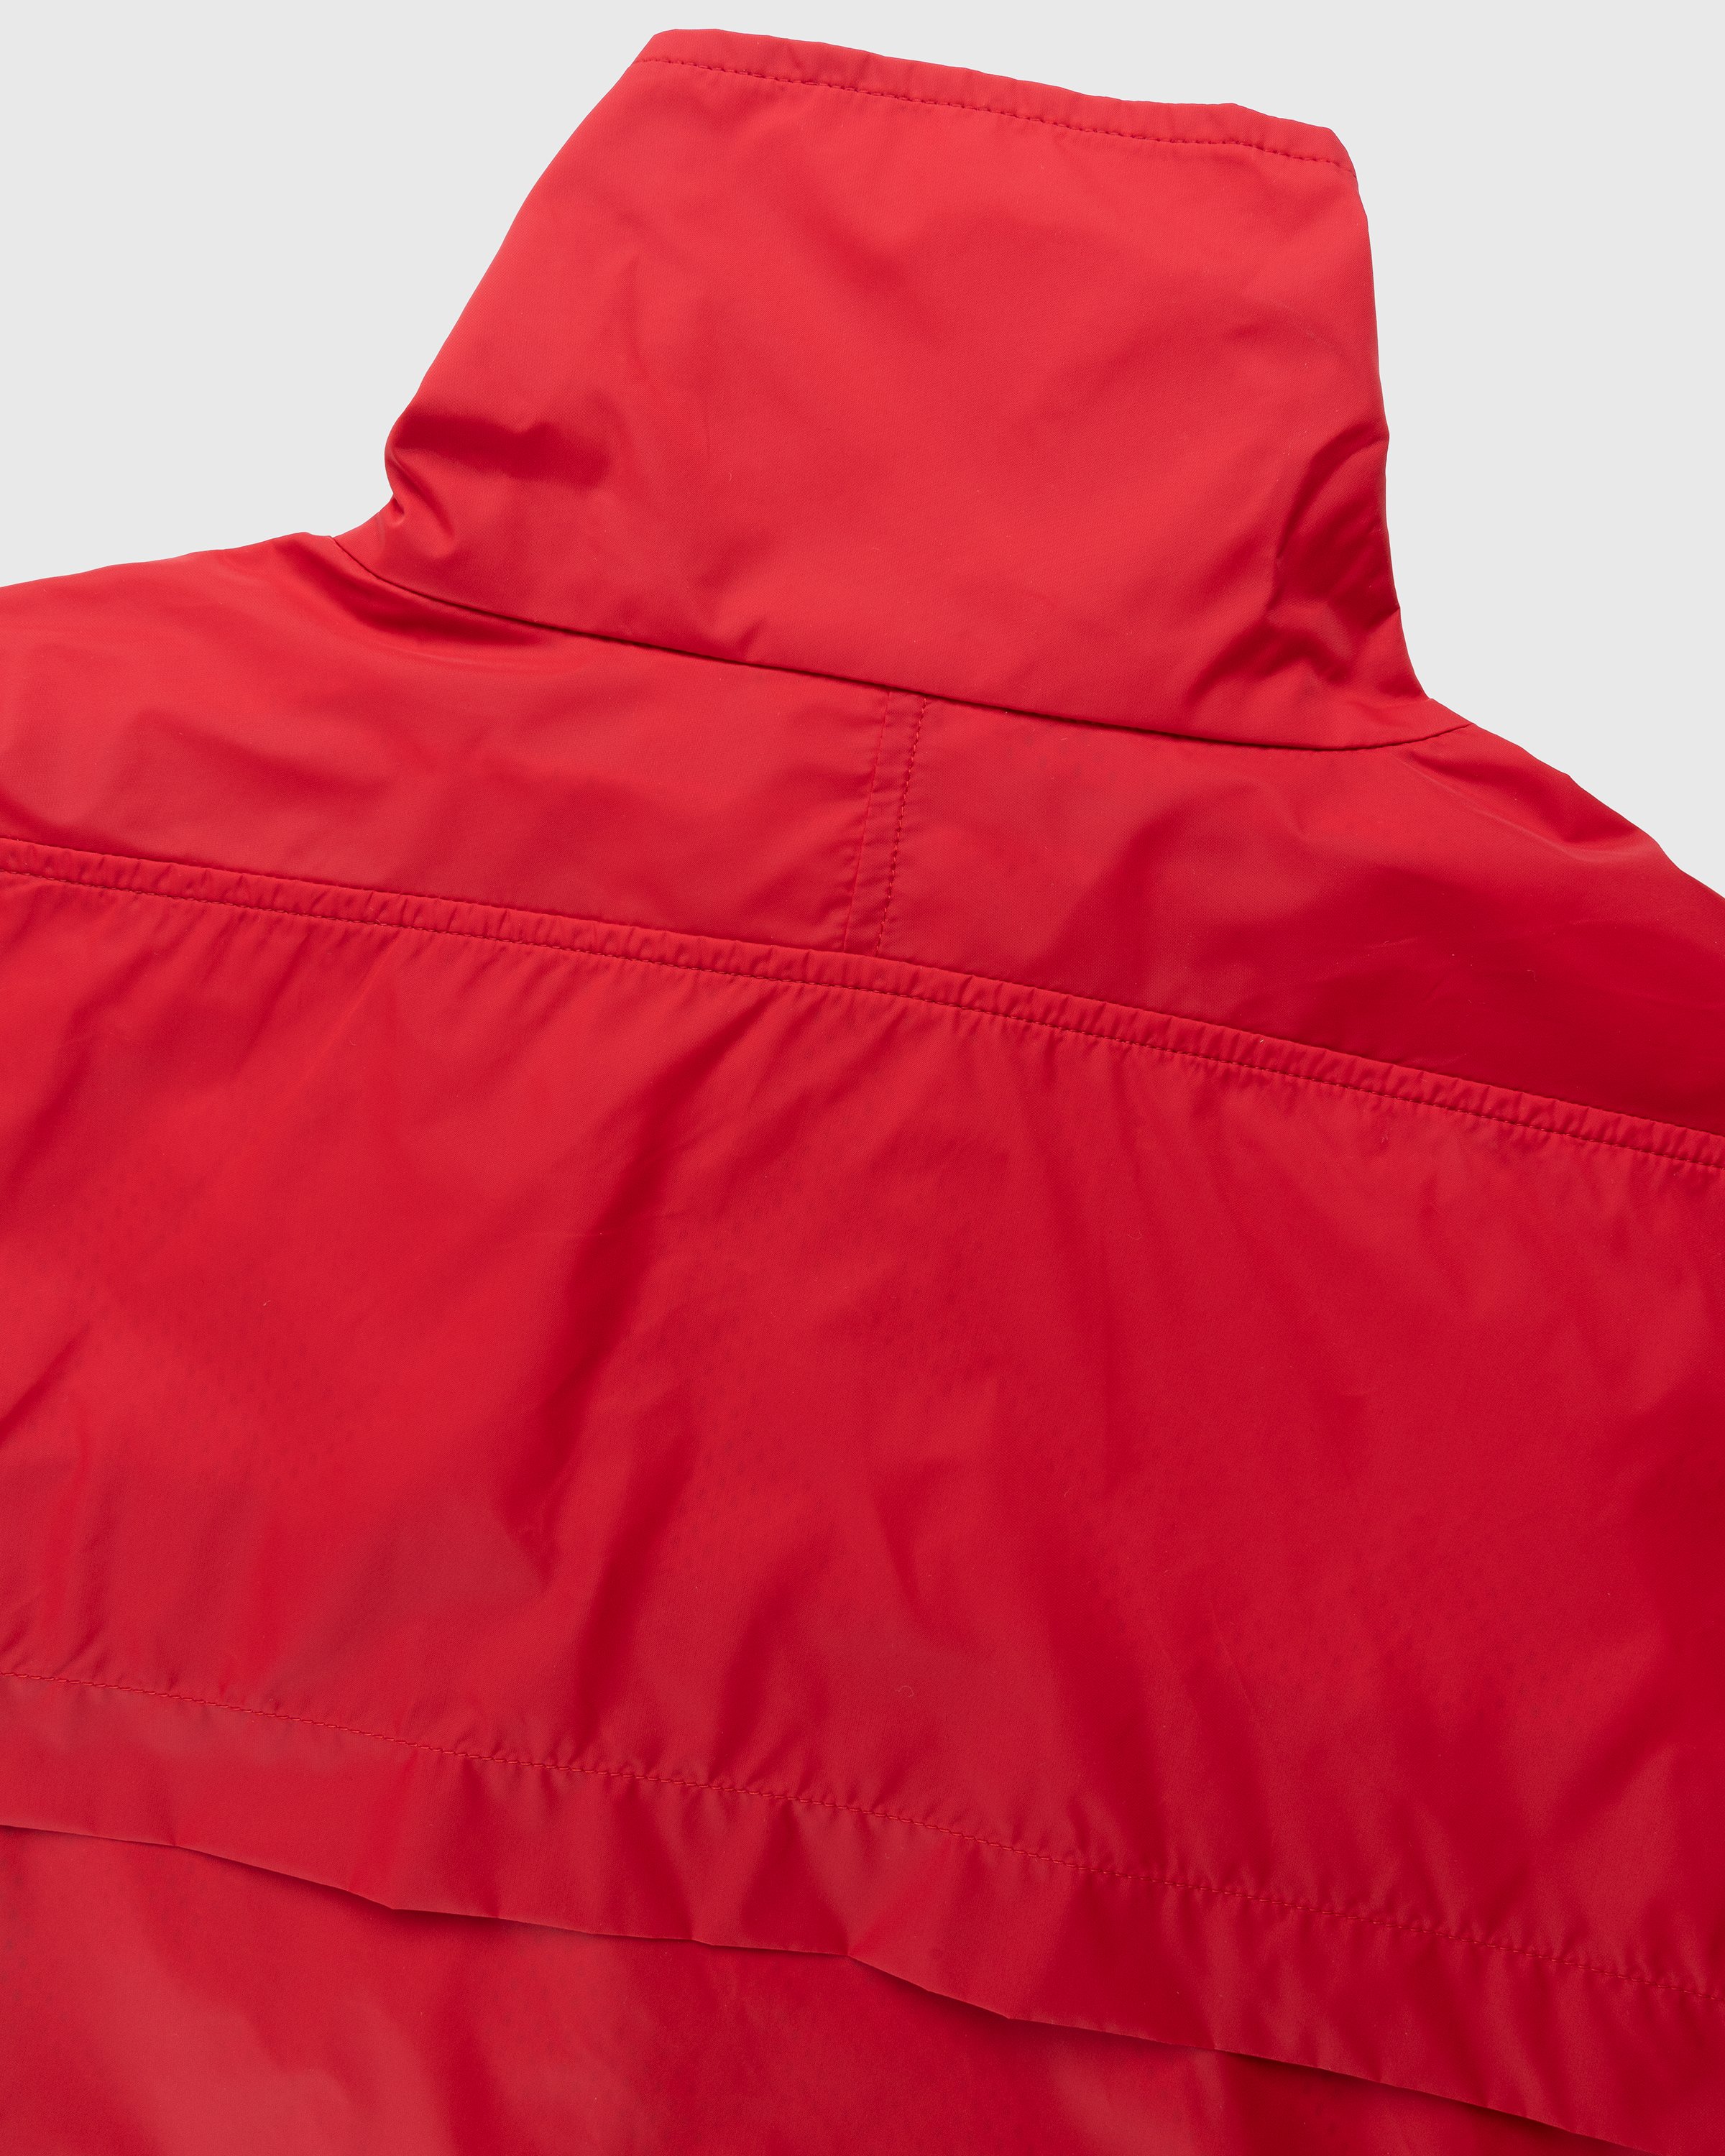 Adidas x Wales Bonner - WB Light Jacket Scarlet - Clothing - Red - Image 4